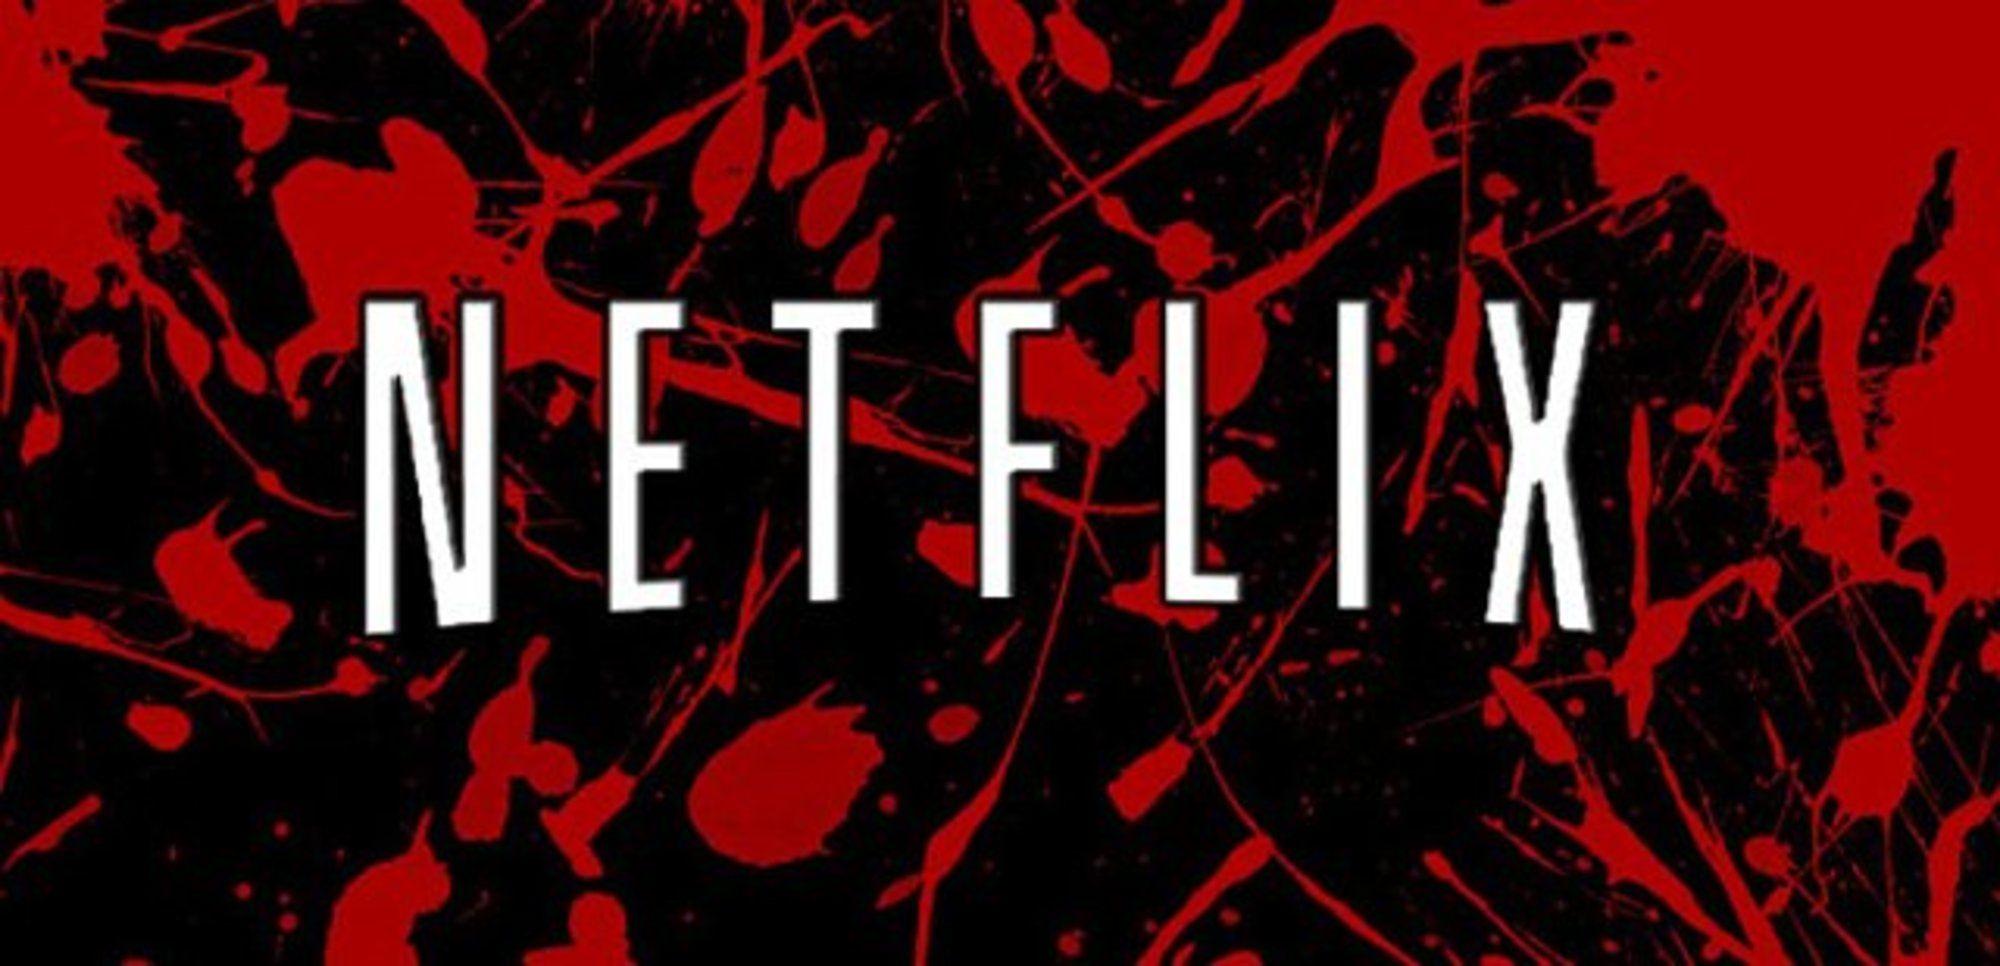 Cool Netflix Logo - Top 5 Netflix Horror Movies Of All Time